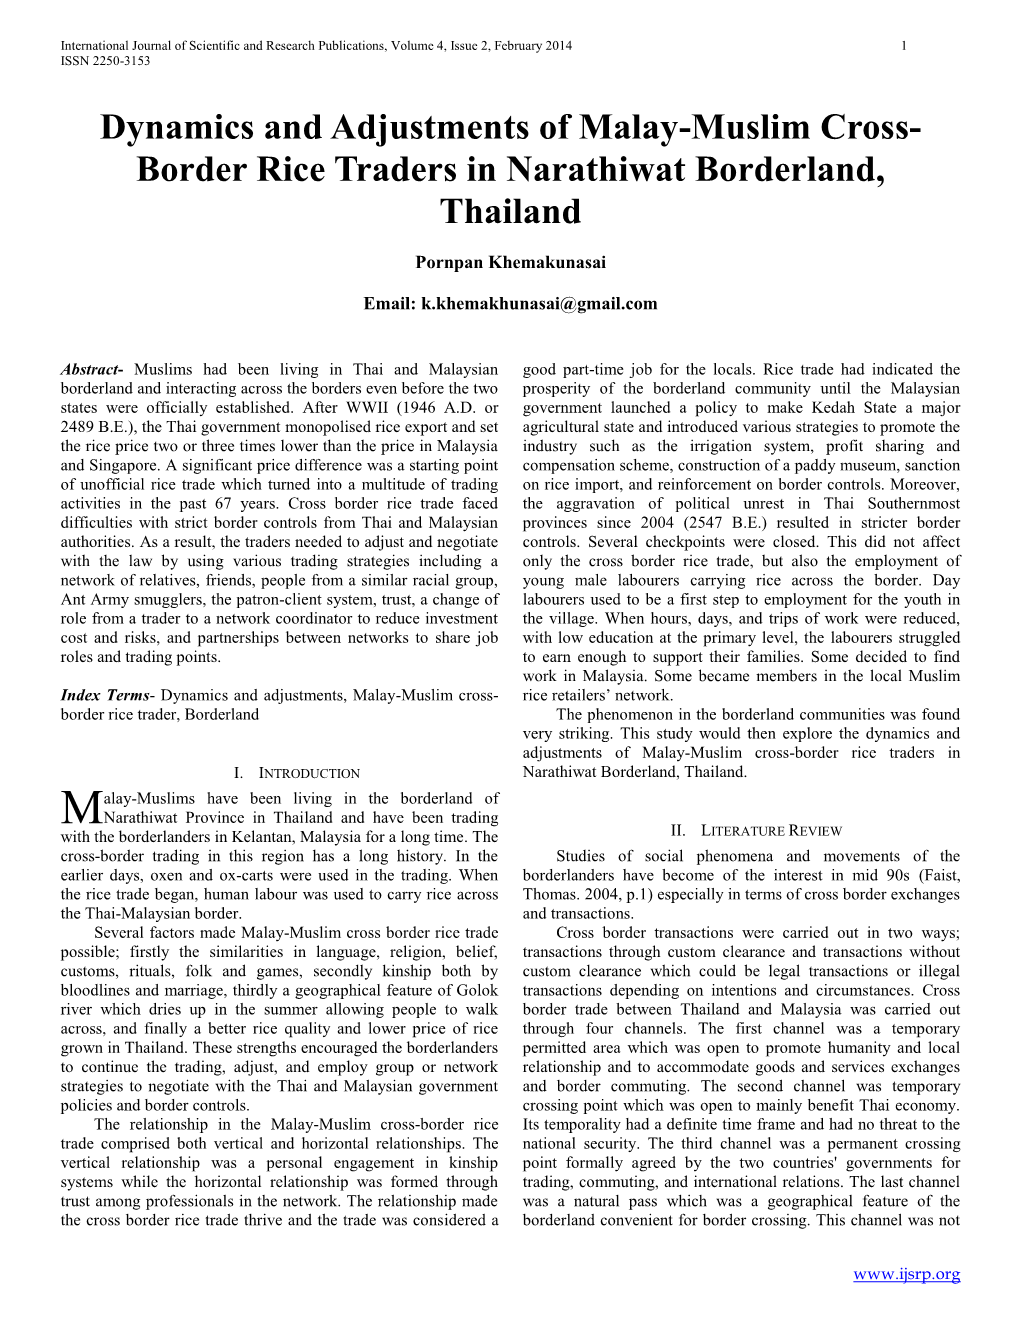 Border Rice Traders in Narathiwat Borderland, Thailand